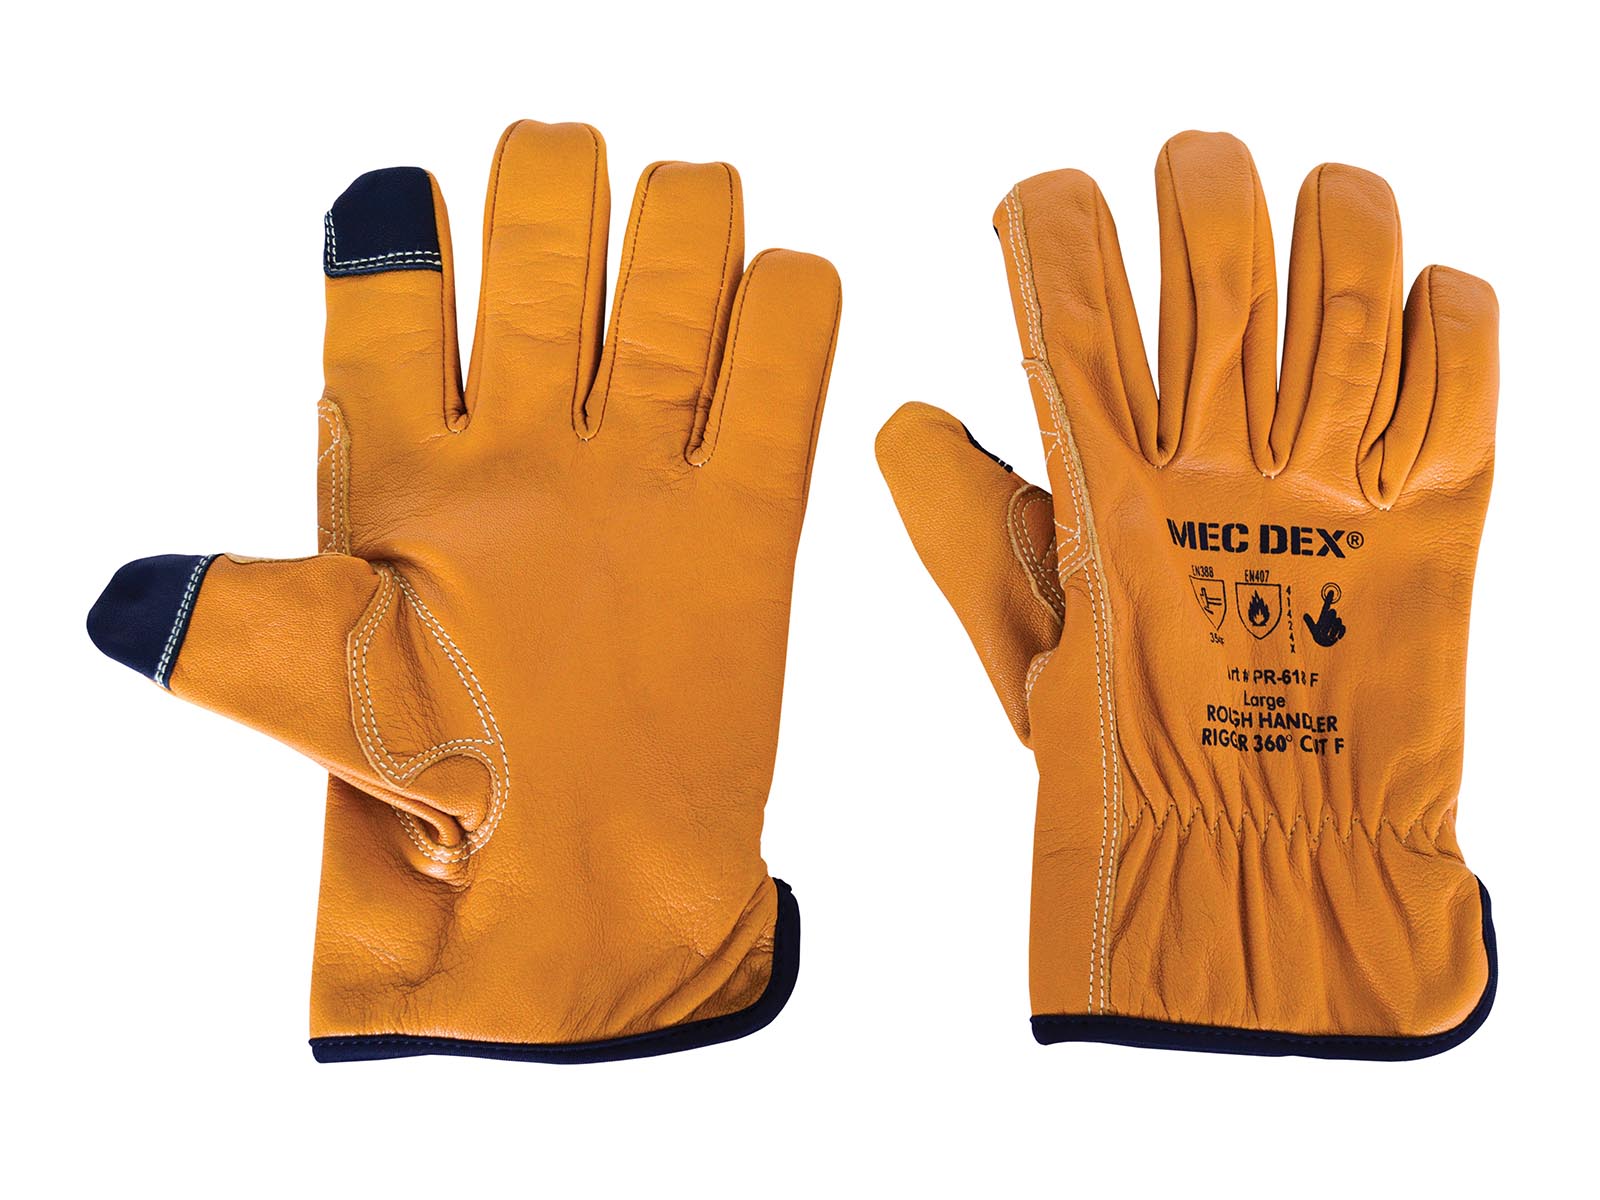 Rough Handler Rigger 360 Cut F Gloves